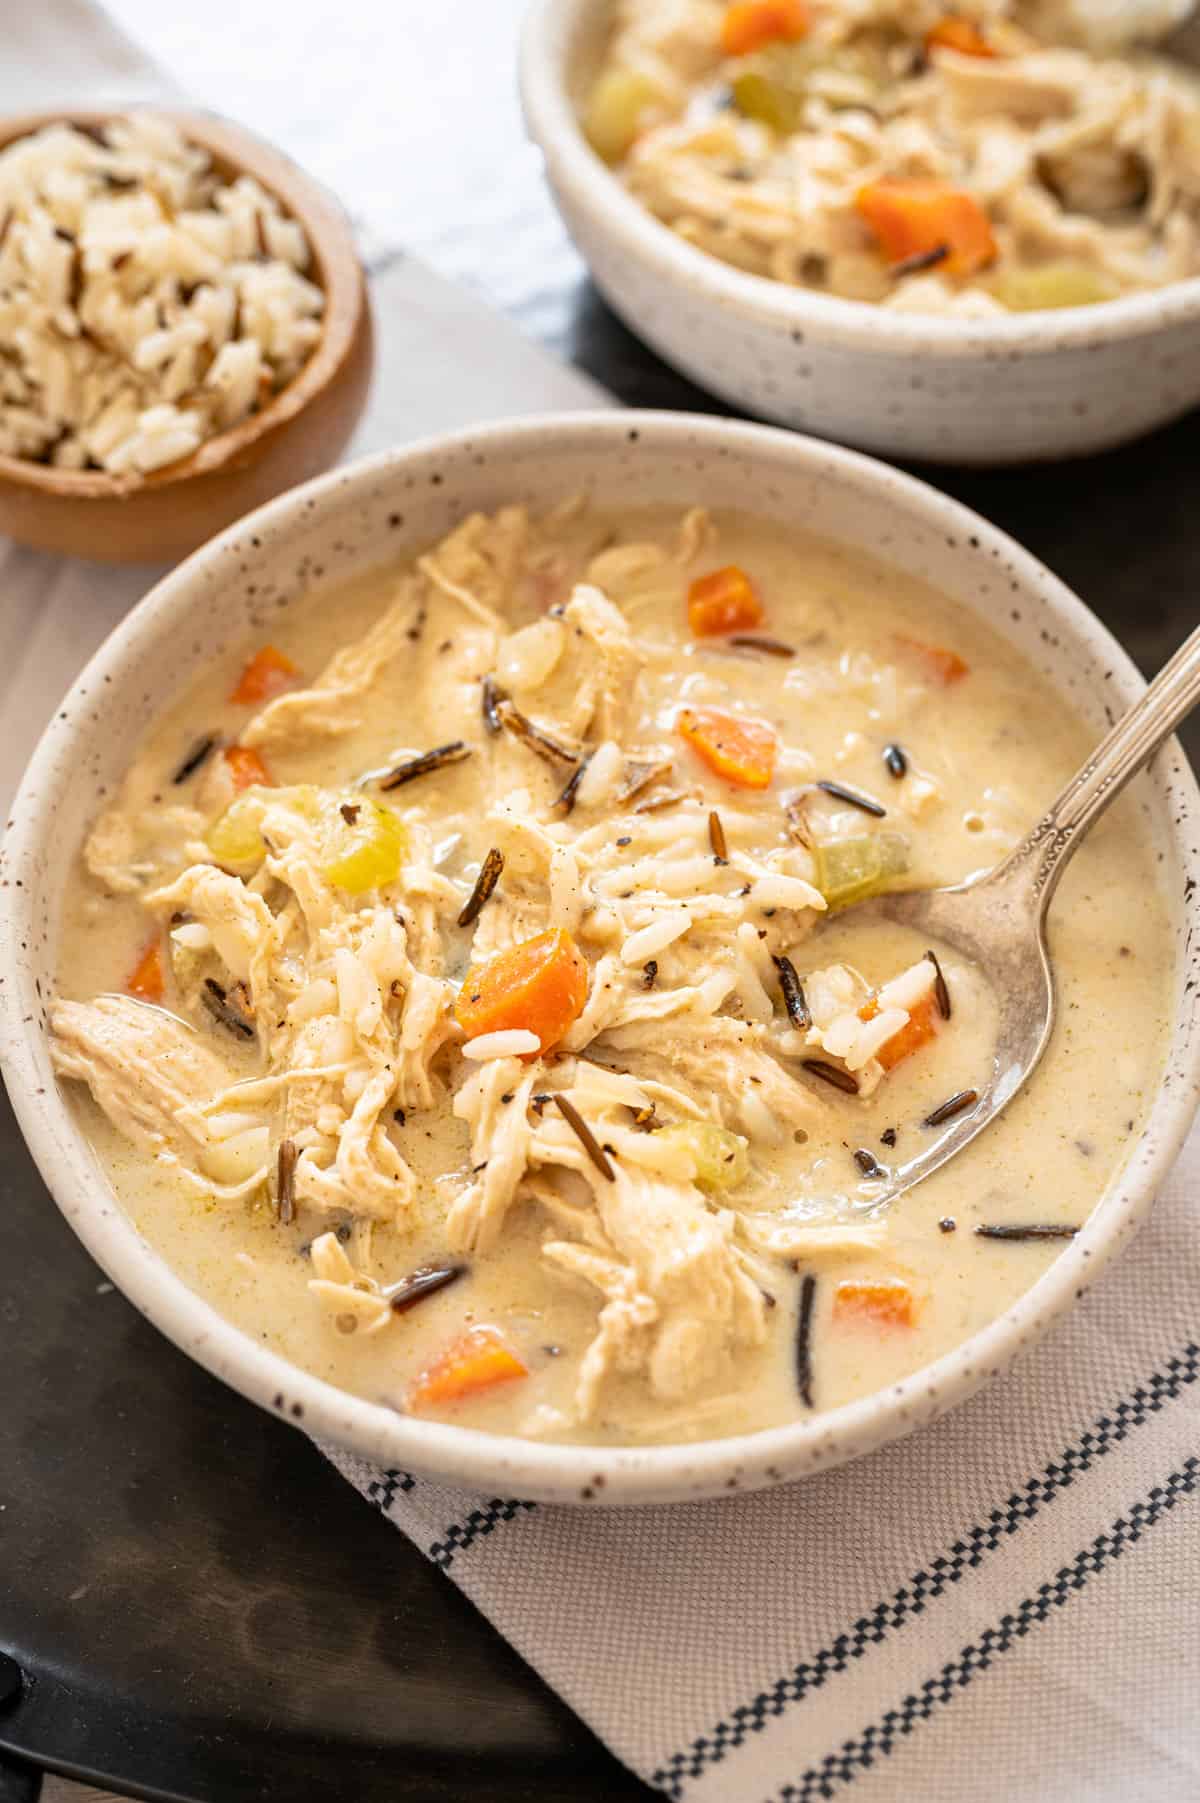 Creamy Chicken and Wild Rice Soup - No Spoon Necessary